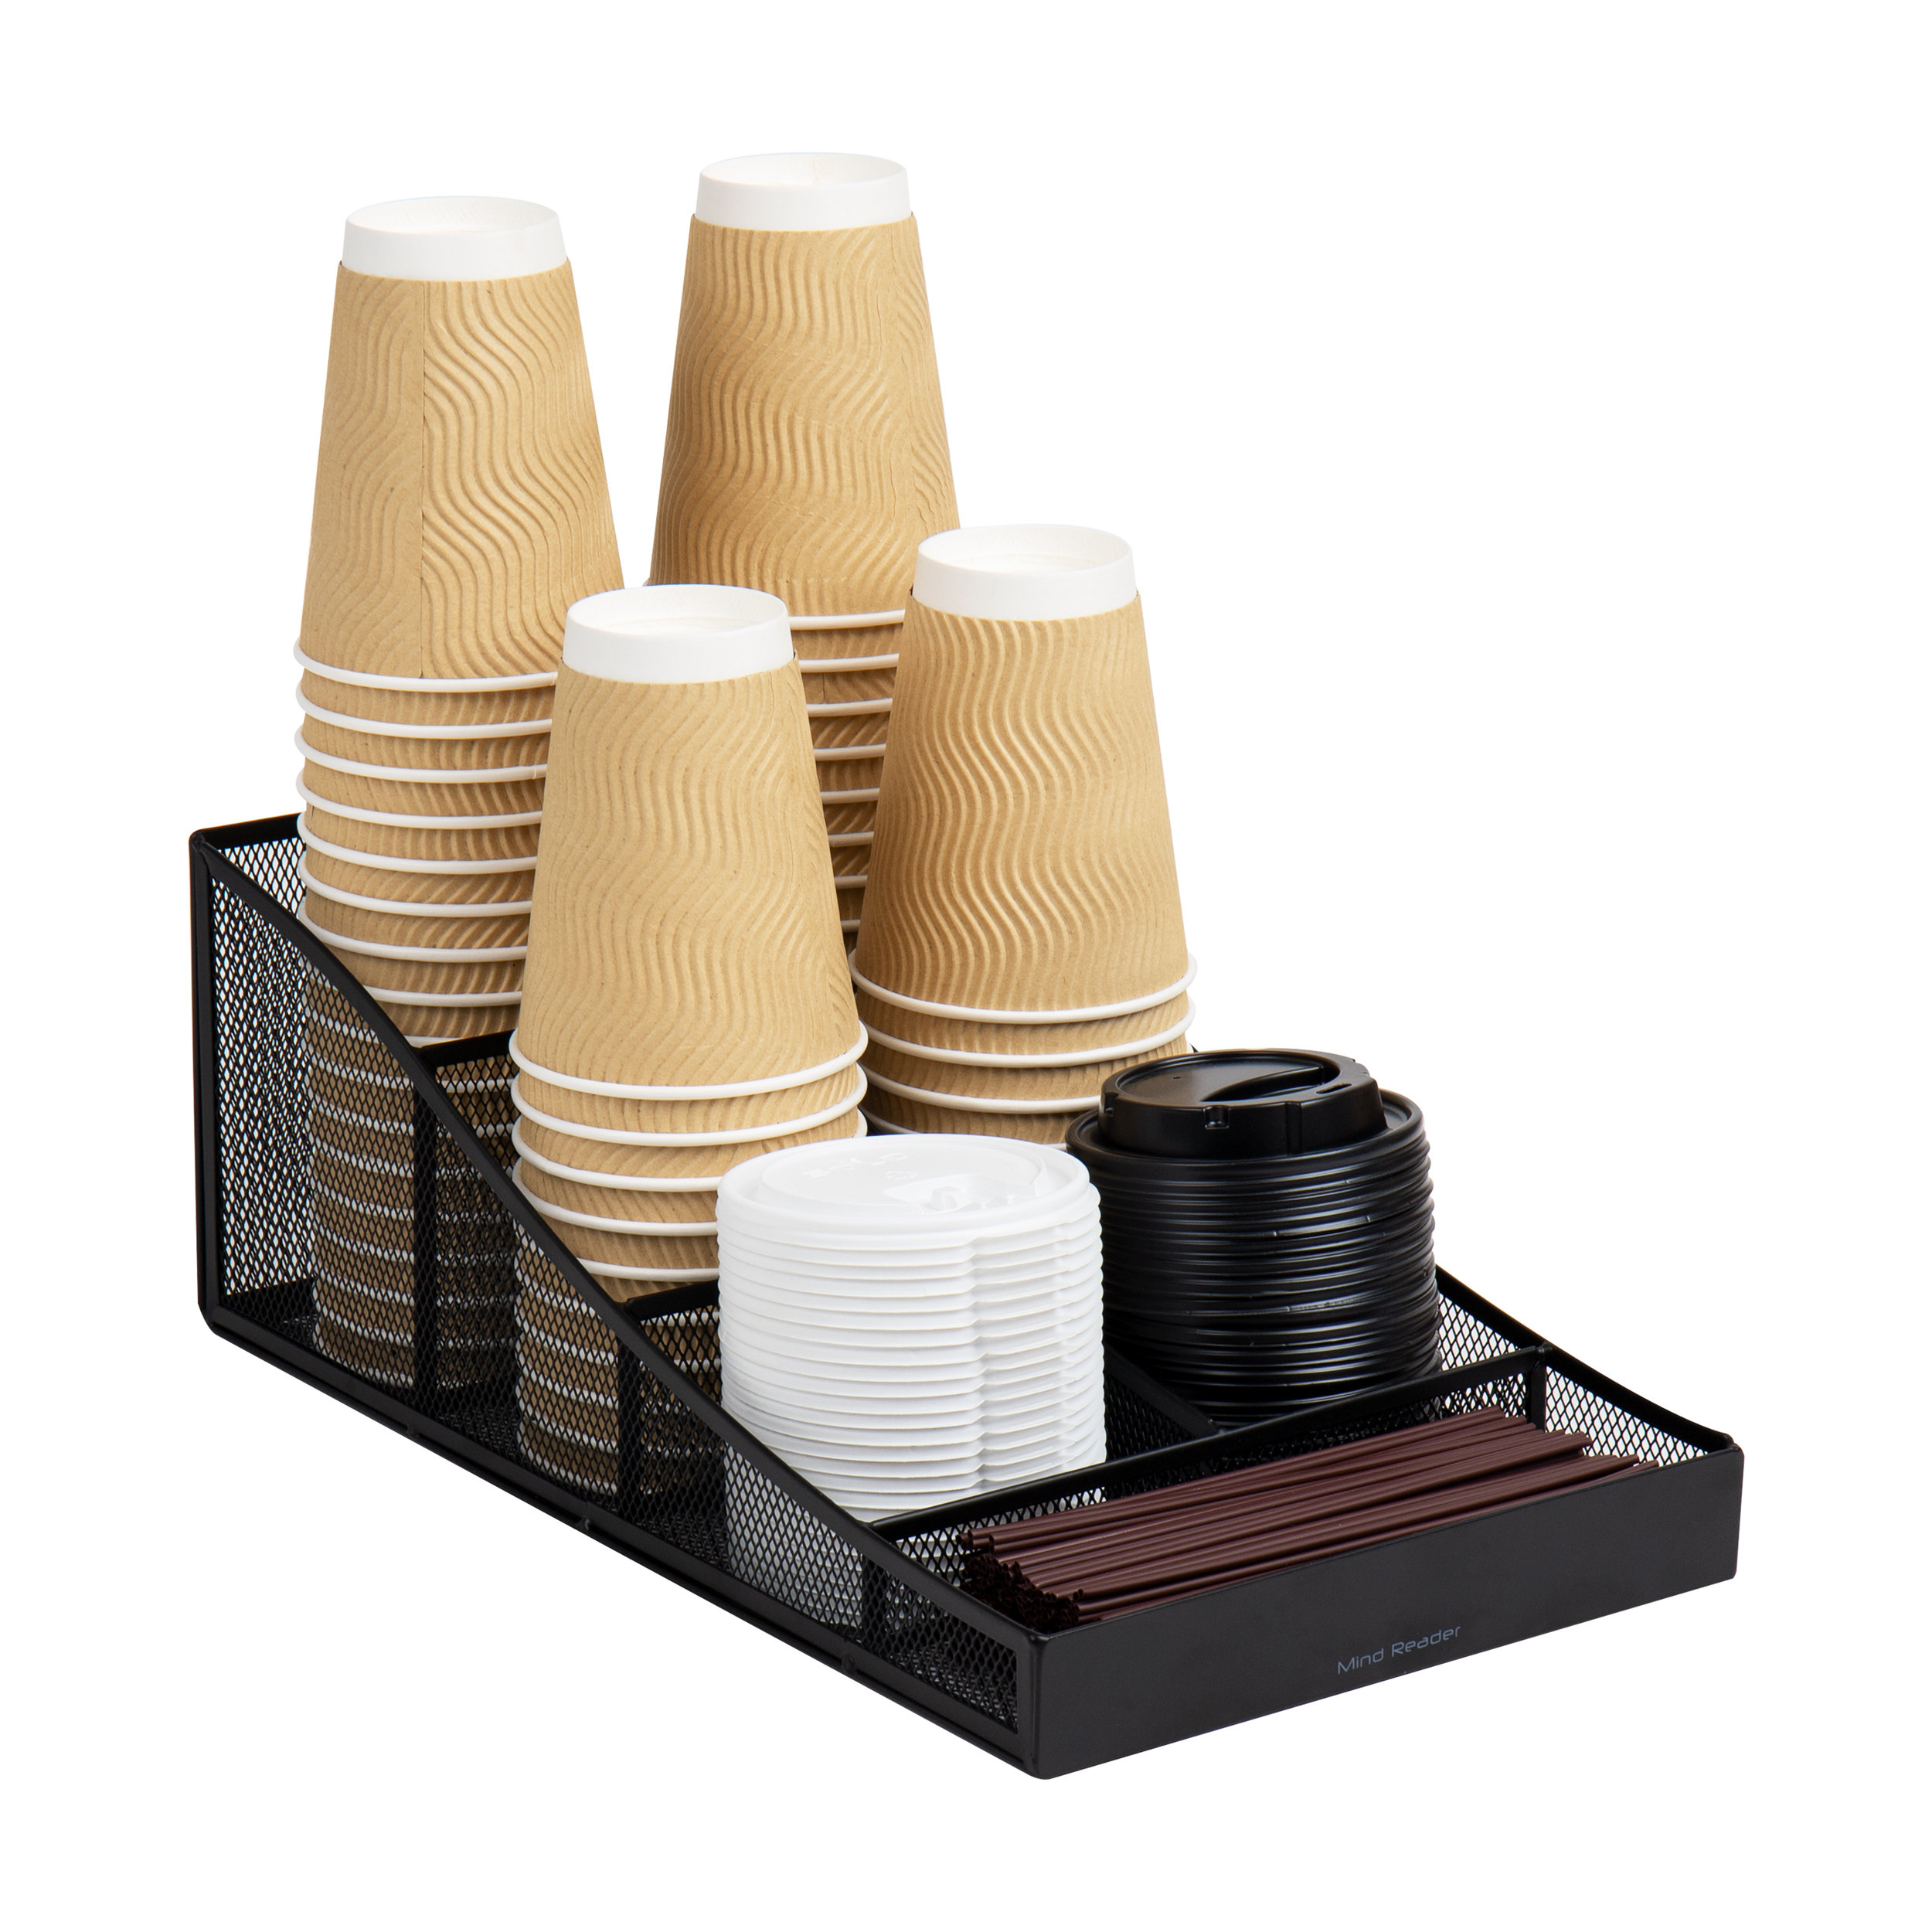 Ron Trading 48 Pod Coffee Accessory And Condiment Storage